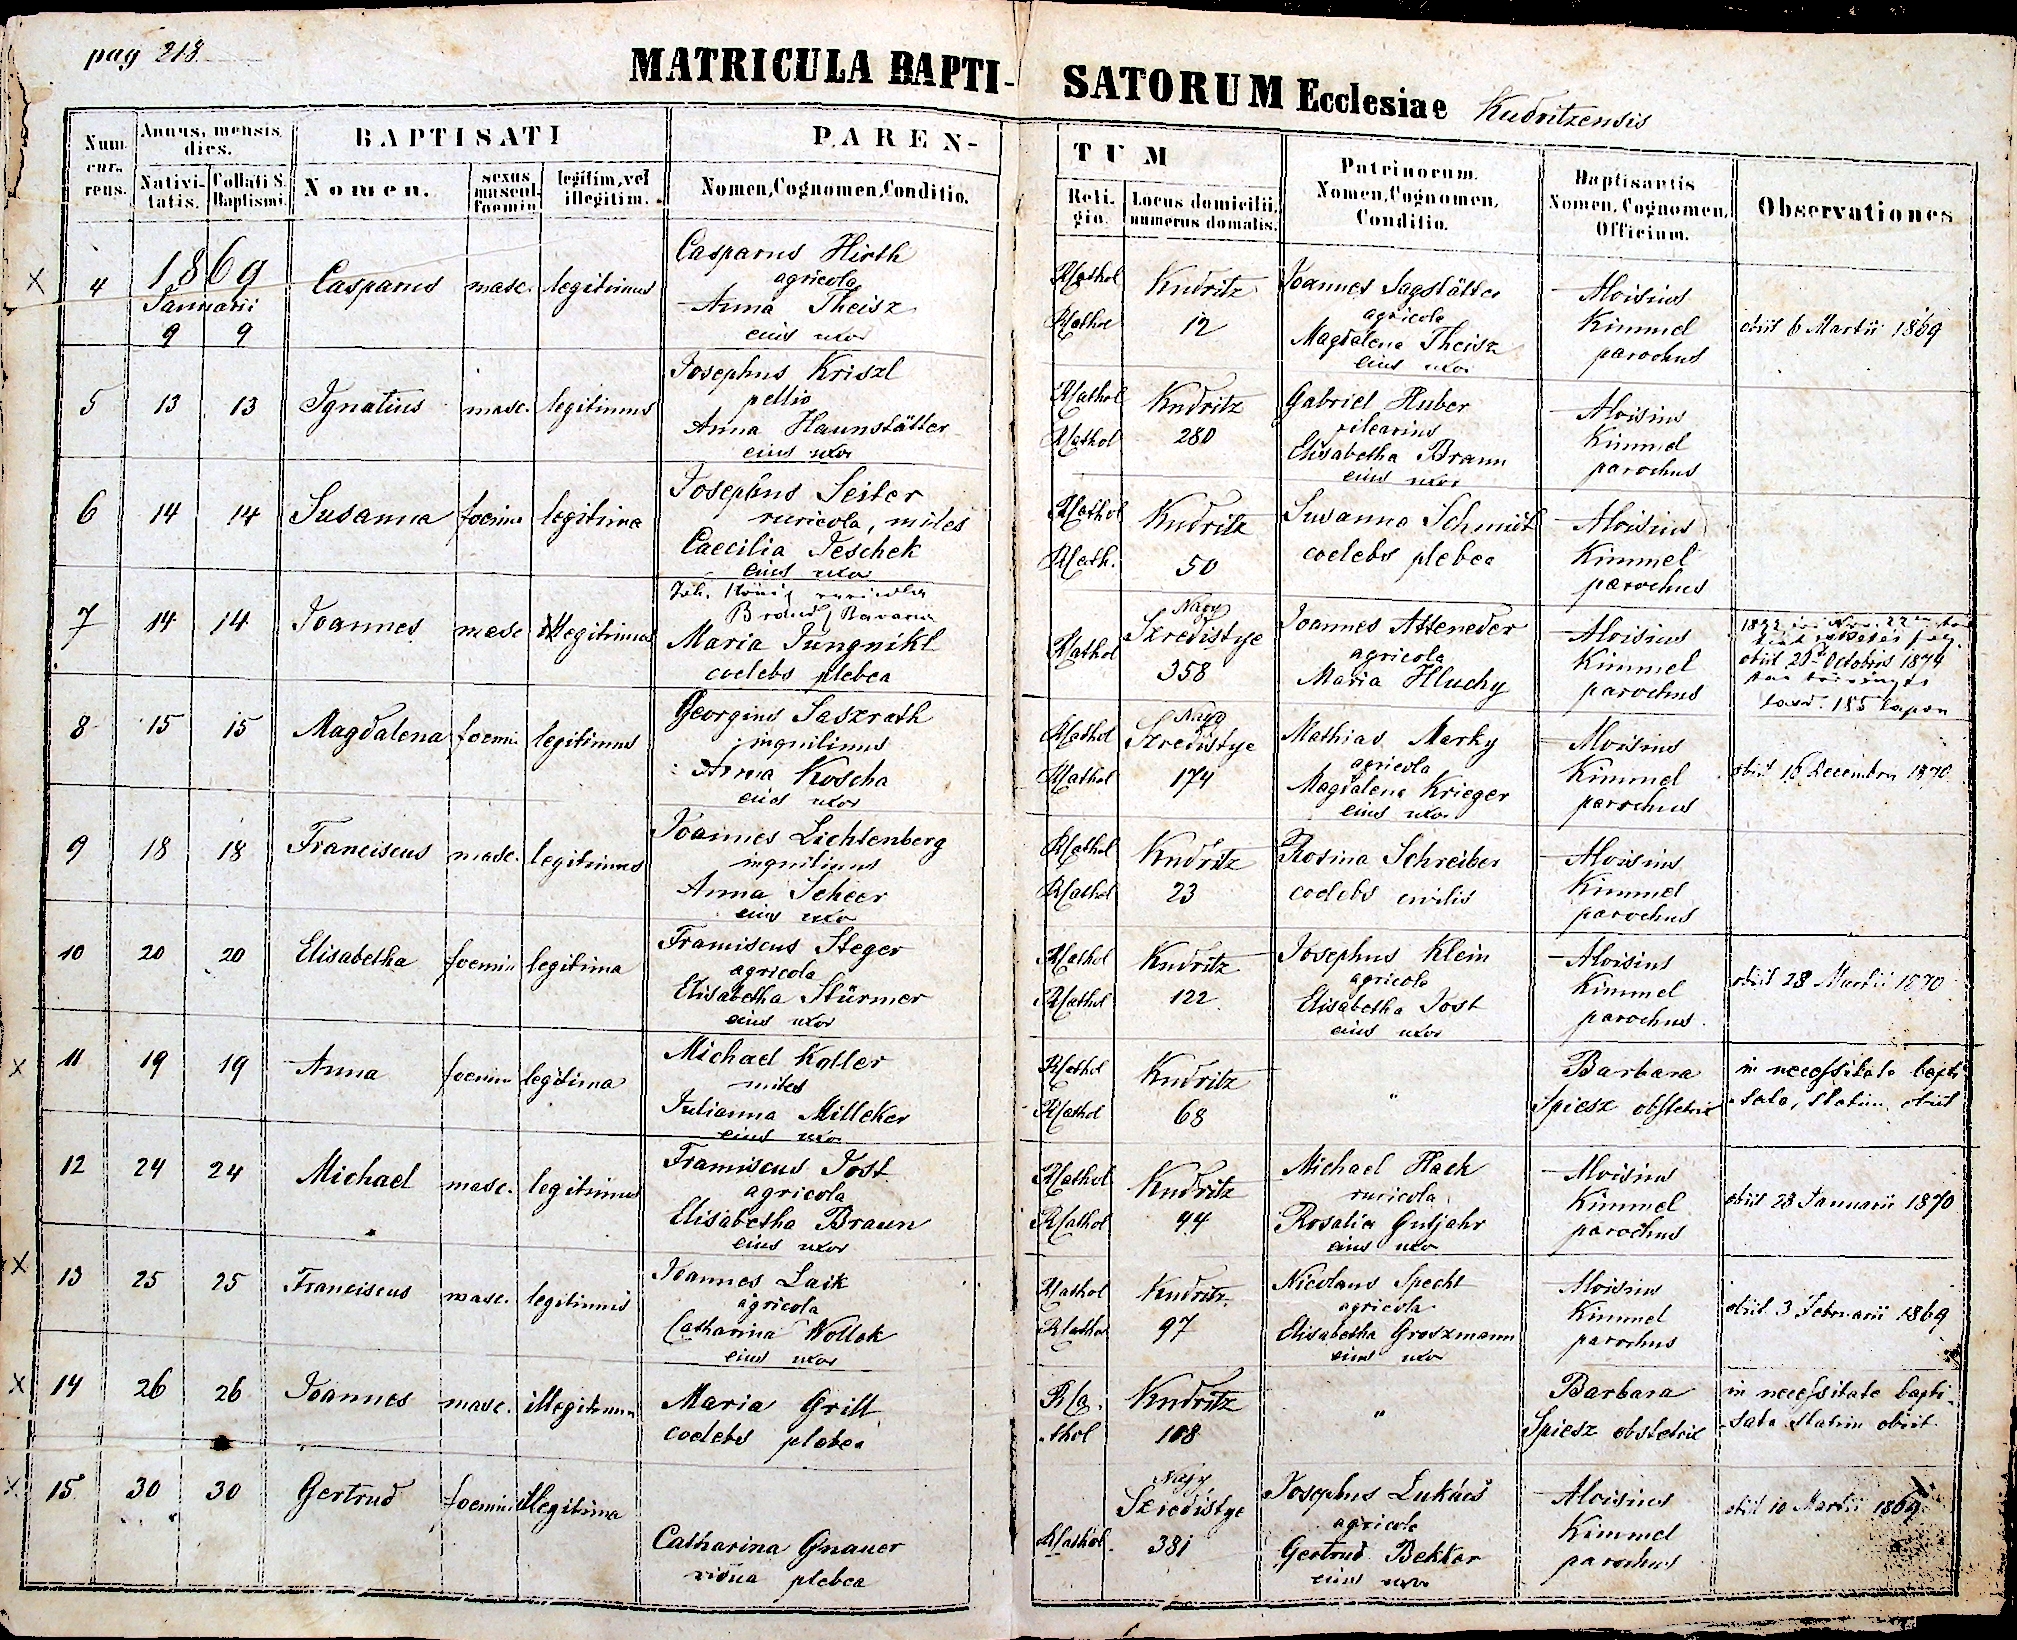 images/church_records/BIRTHS/1852-1870B/218